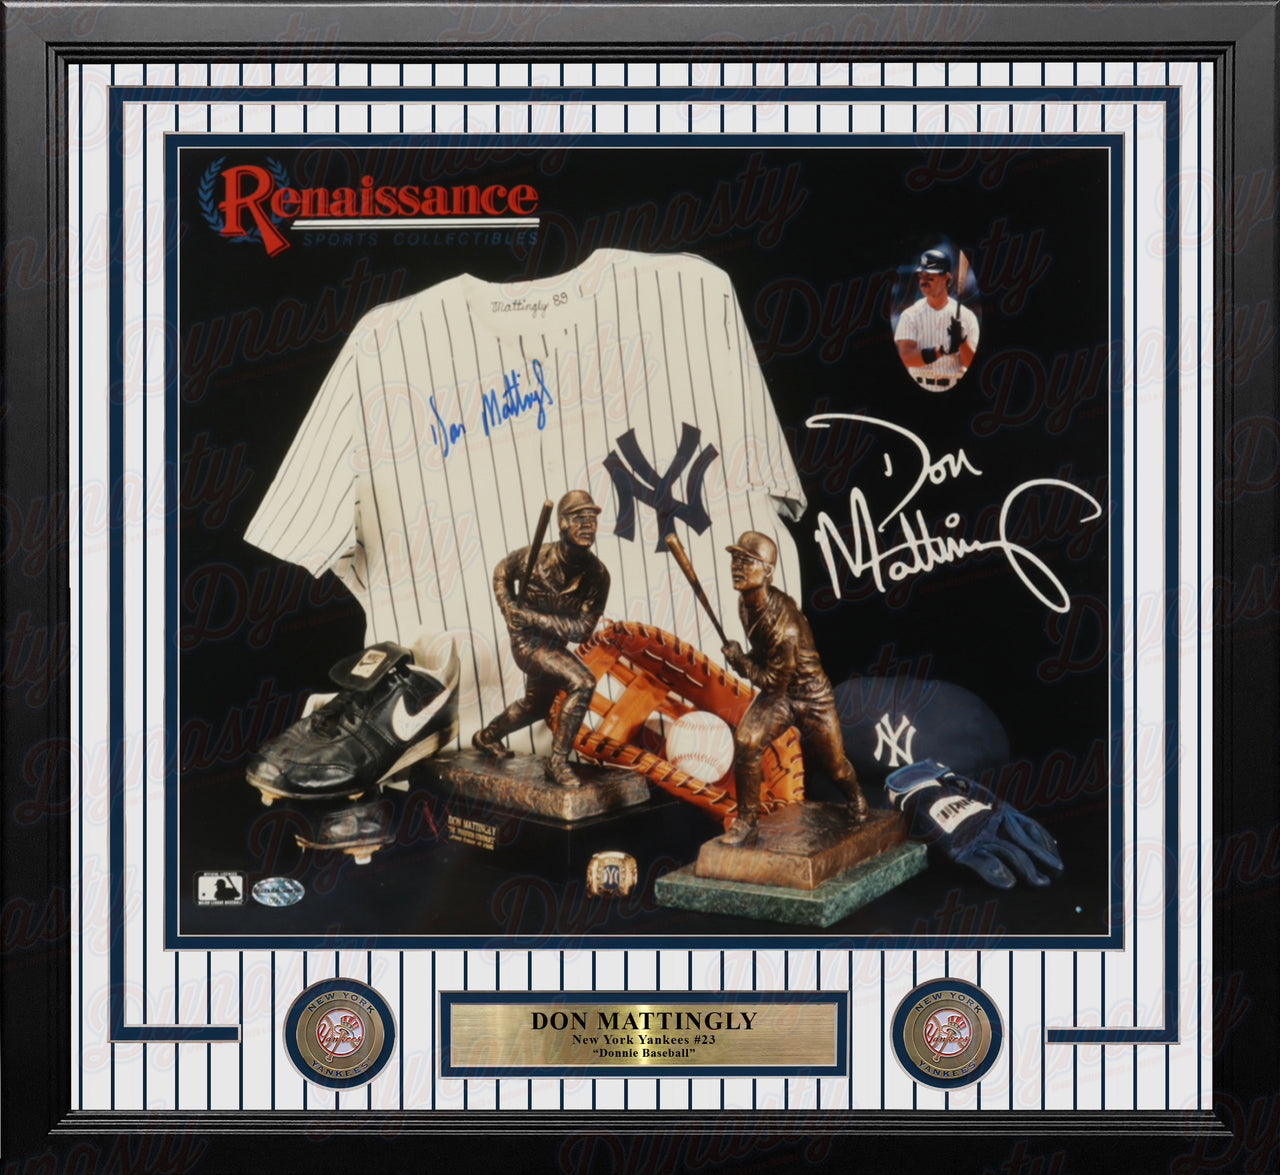 Aaron Judge Autographed New York Yankees 62 Home Run Signed Baseball 16x20  Framed Photo Fanatics Authentic COA